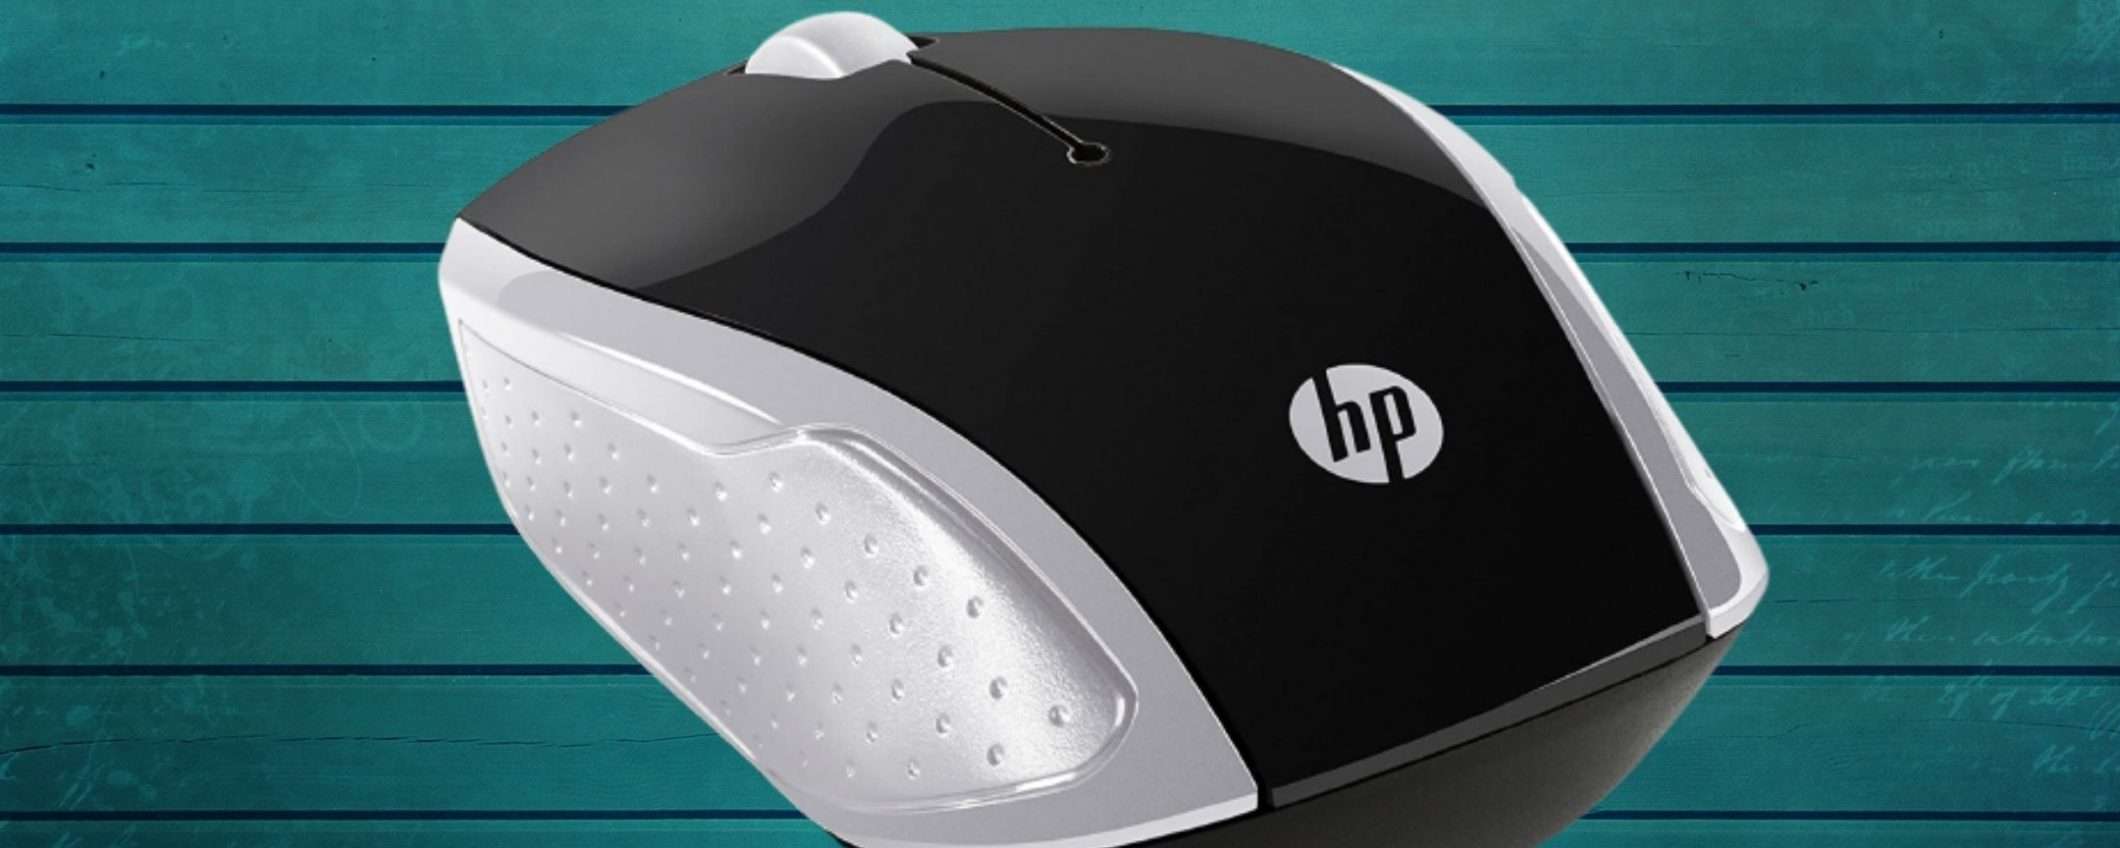 Mouse HP a due spicci: wireless e comodissimo